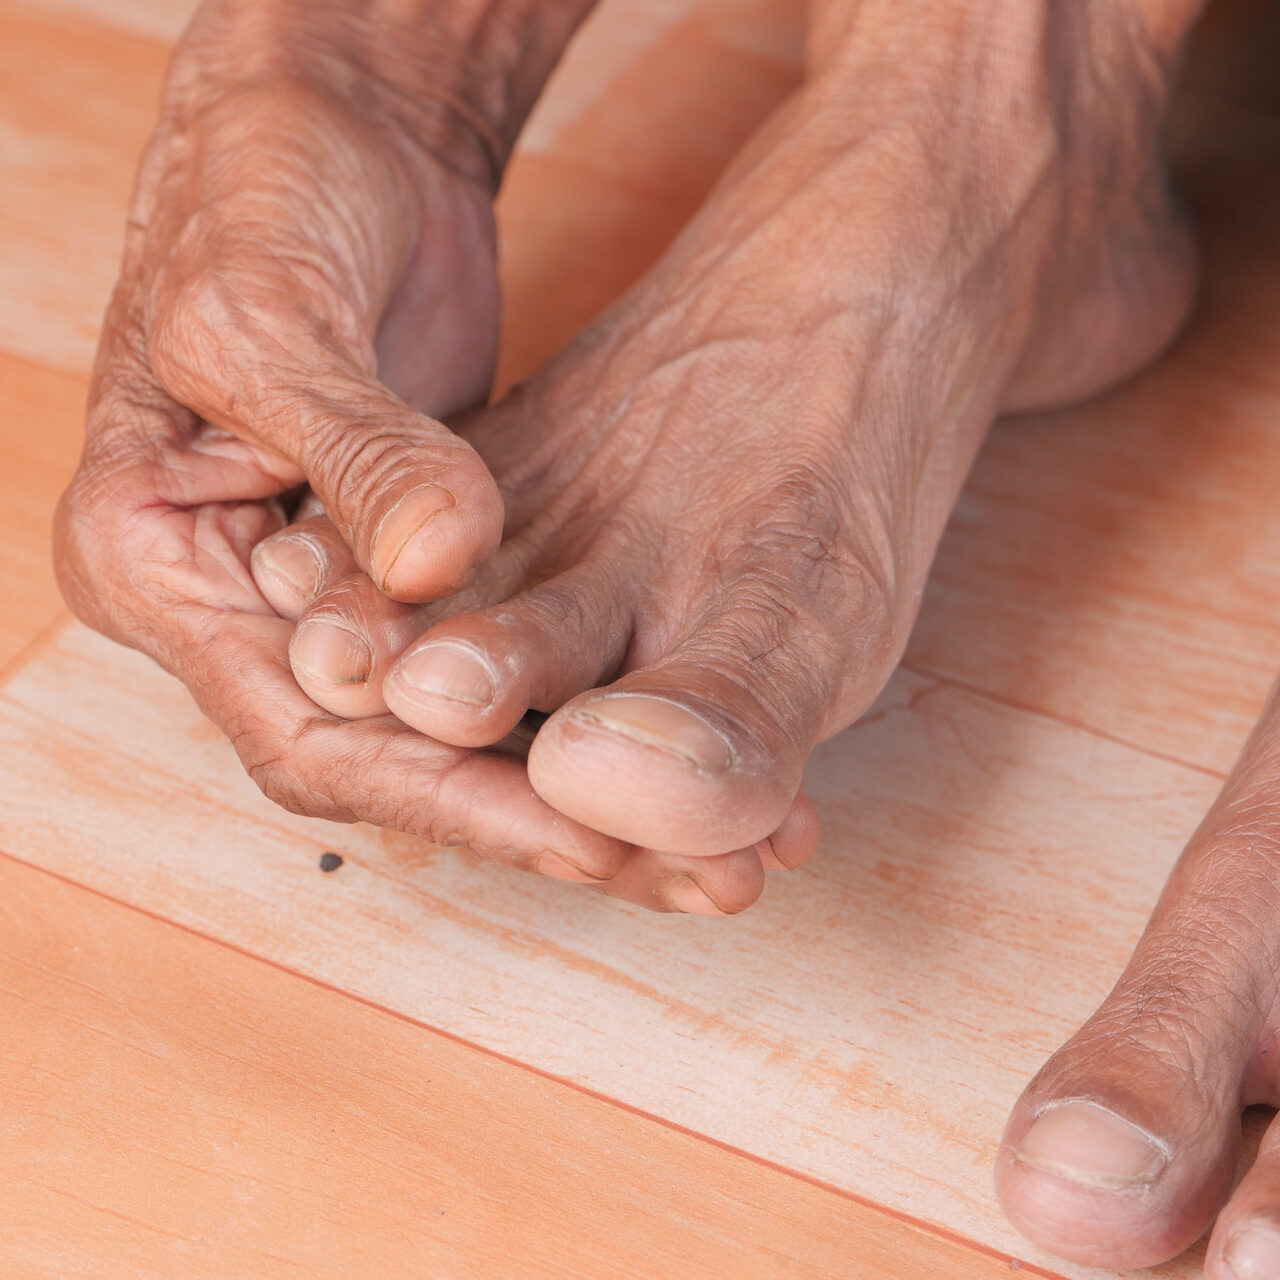 close-up-senior-women-feet-hand-massage-injury-spot